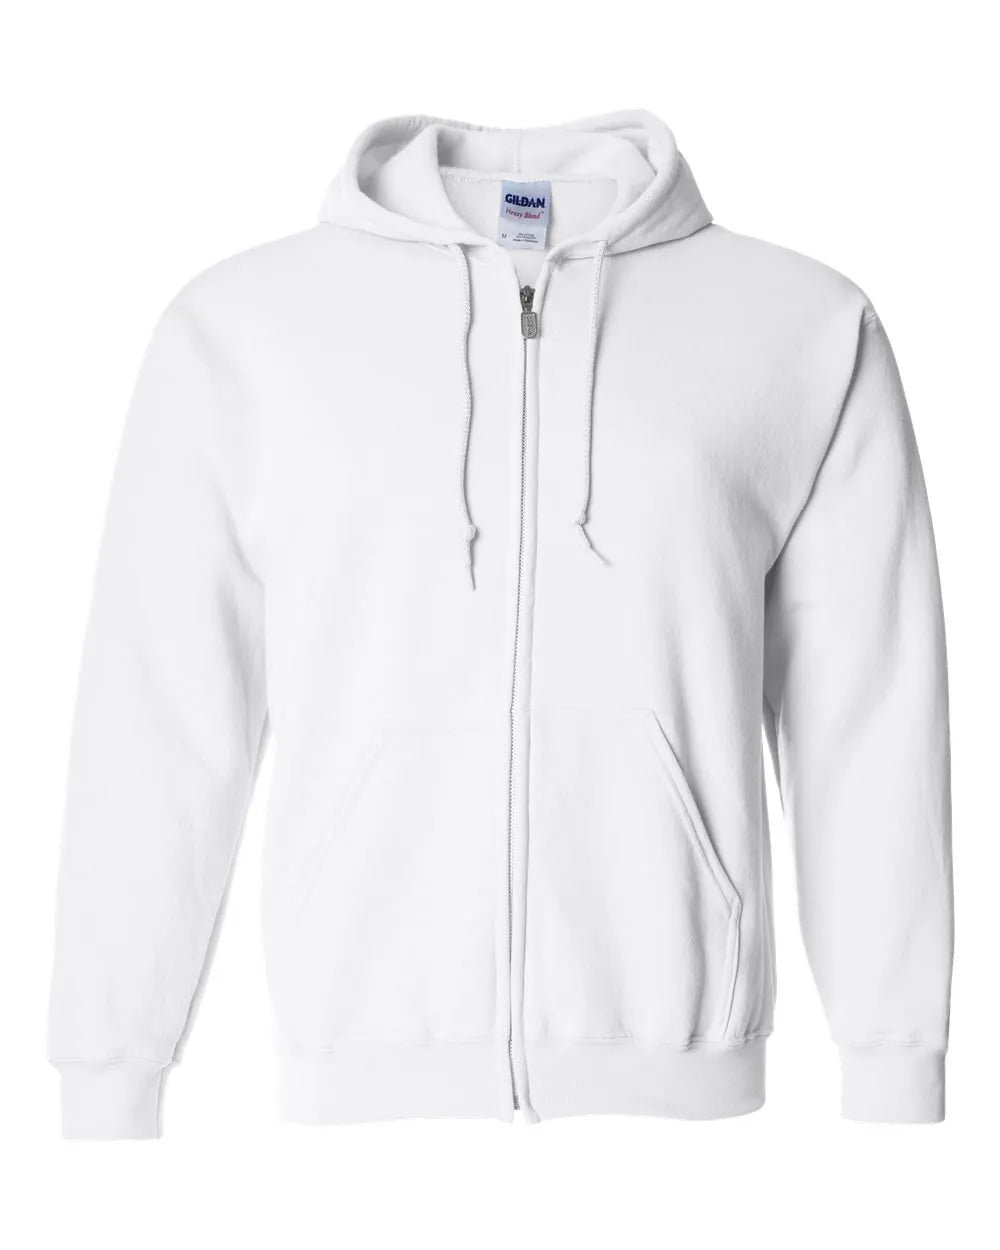 Custom Adult’s Unisex Full Zip Hooded Sweatshirt With Kangaroo Pocket